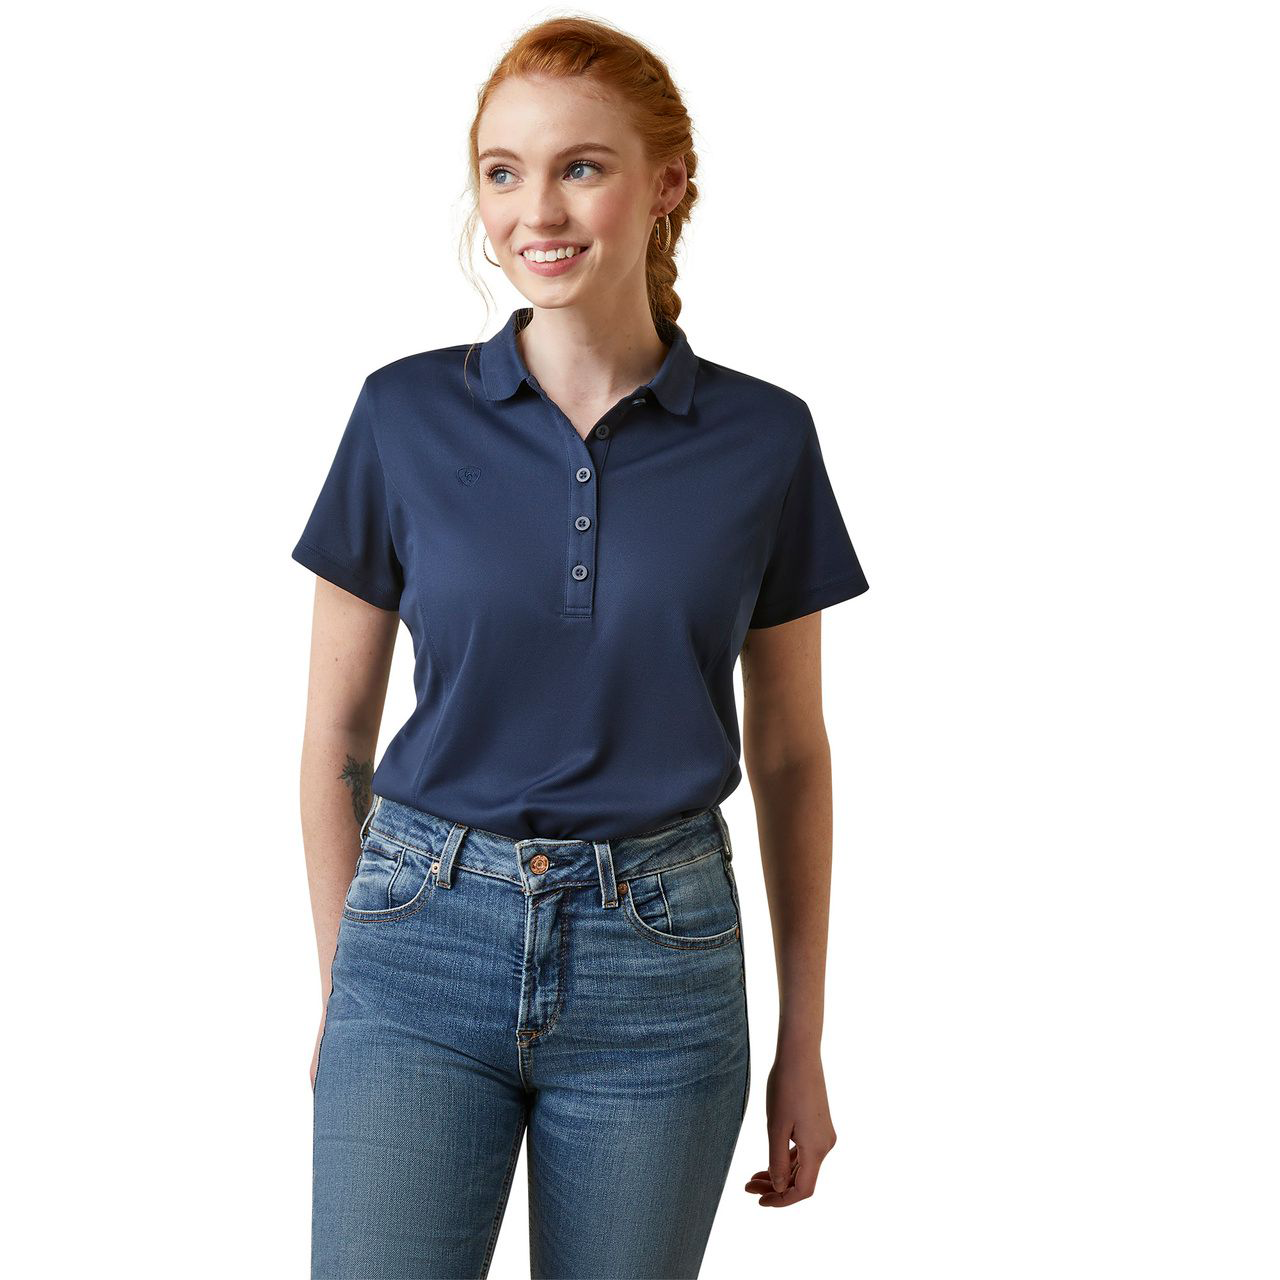 Ariat TEK Short-Sleeve Polo for Ladies - Navy - XXL